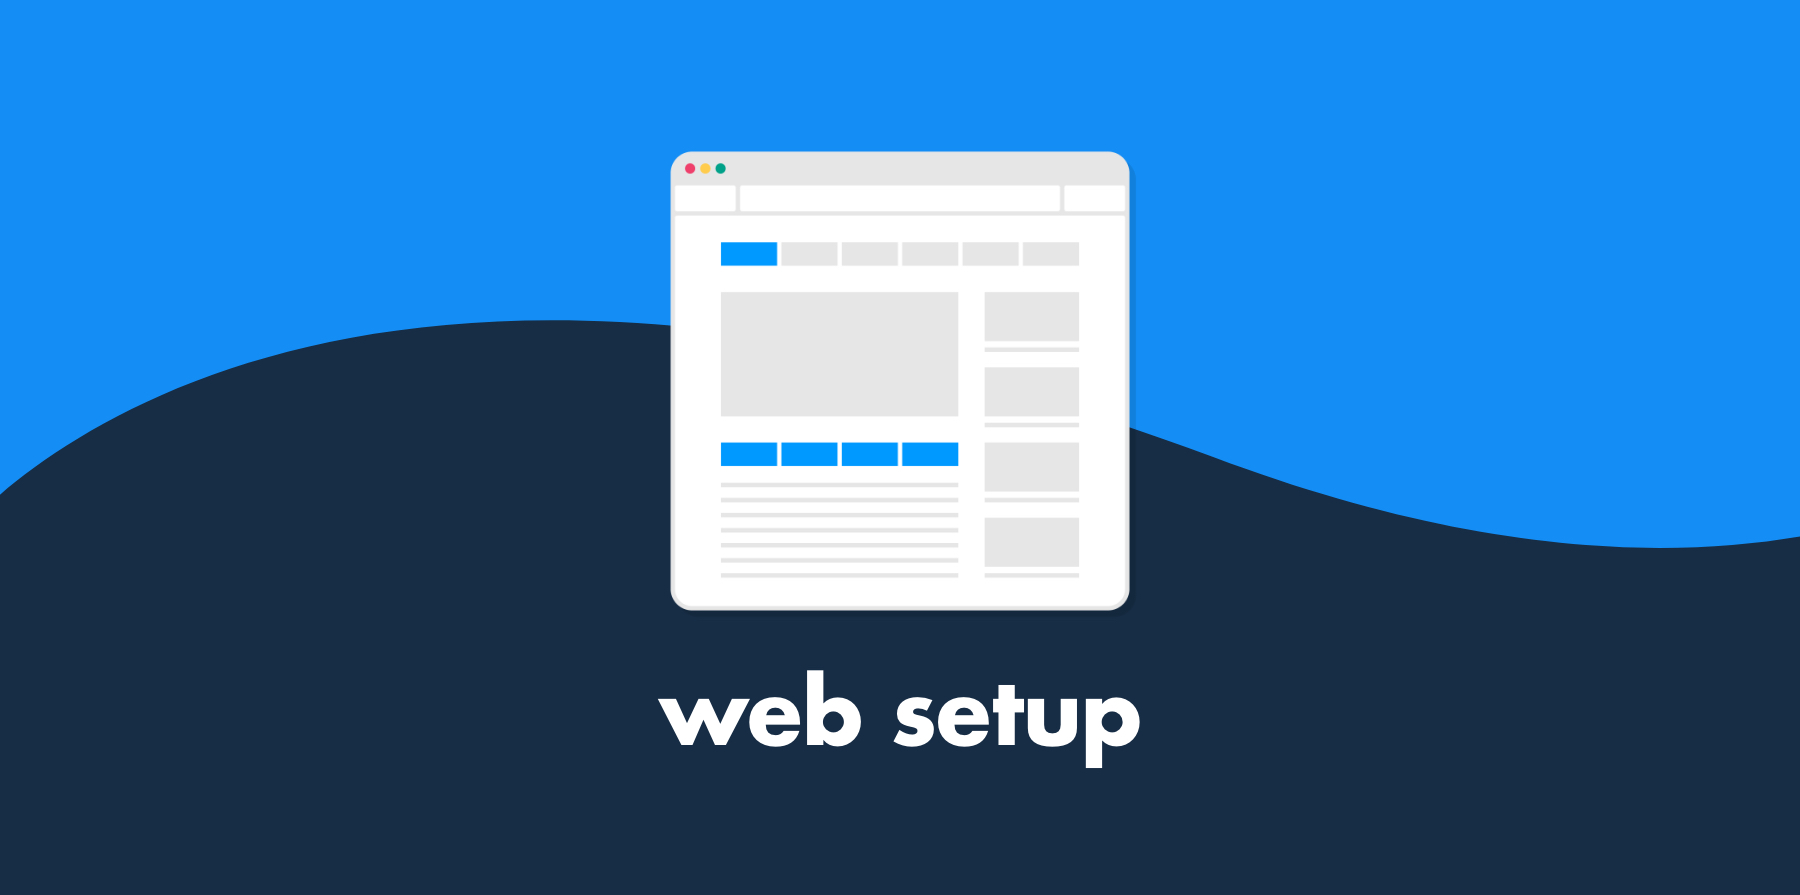 Web Setup (Domain, SSL Certificate, & More) Image